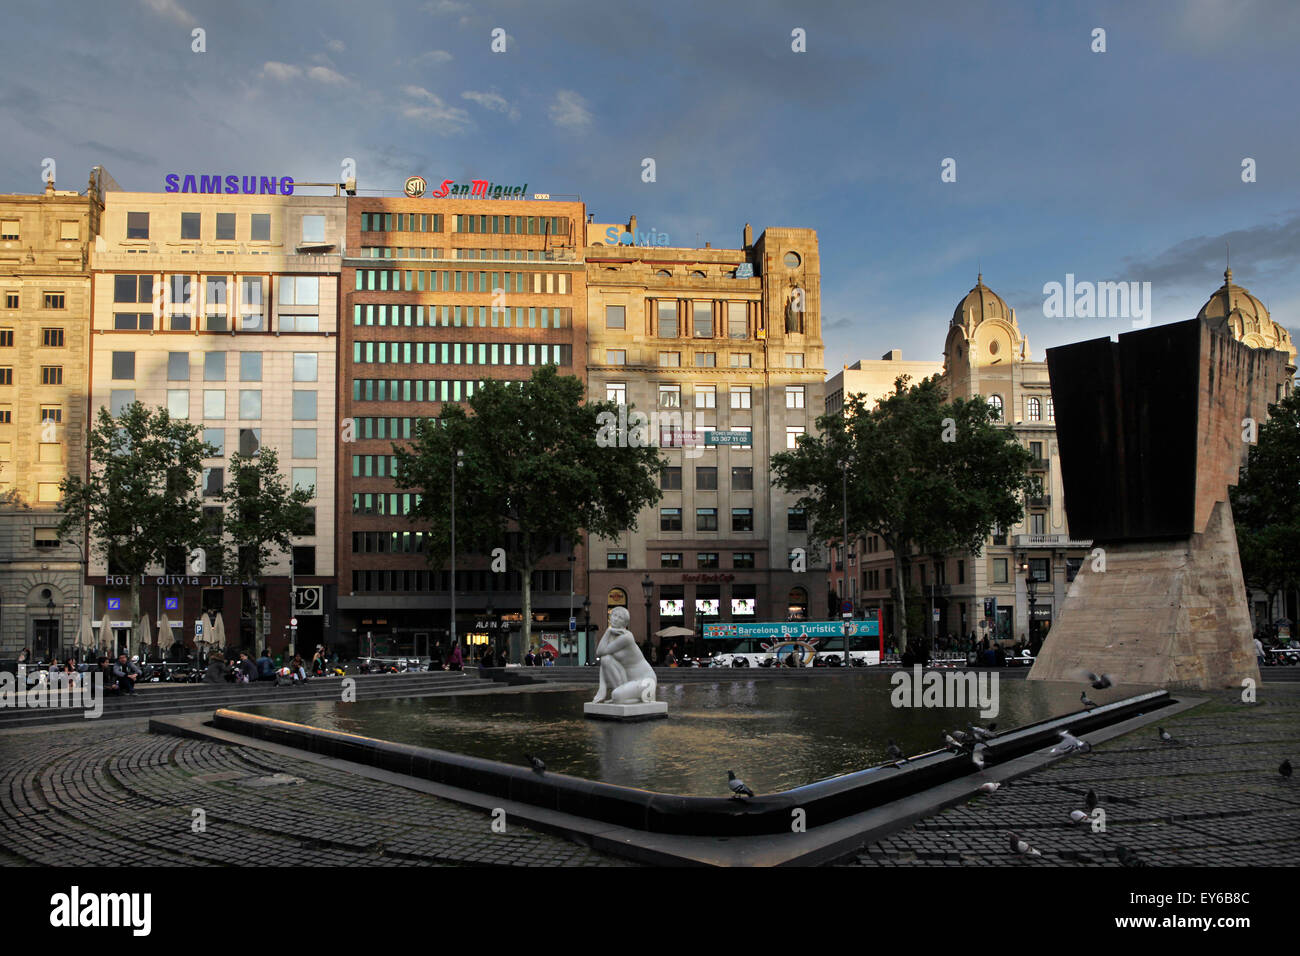 Barcelona Plaza Catalunya Cataluña Katalonien Spanien Subirachs am Nachmittag schöne Reise Tourismus Platz Stockfoto